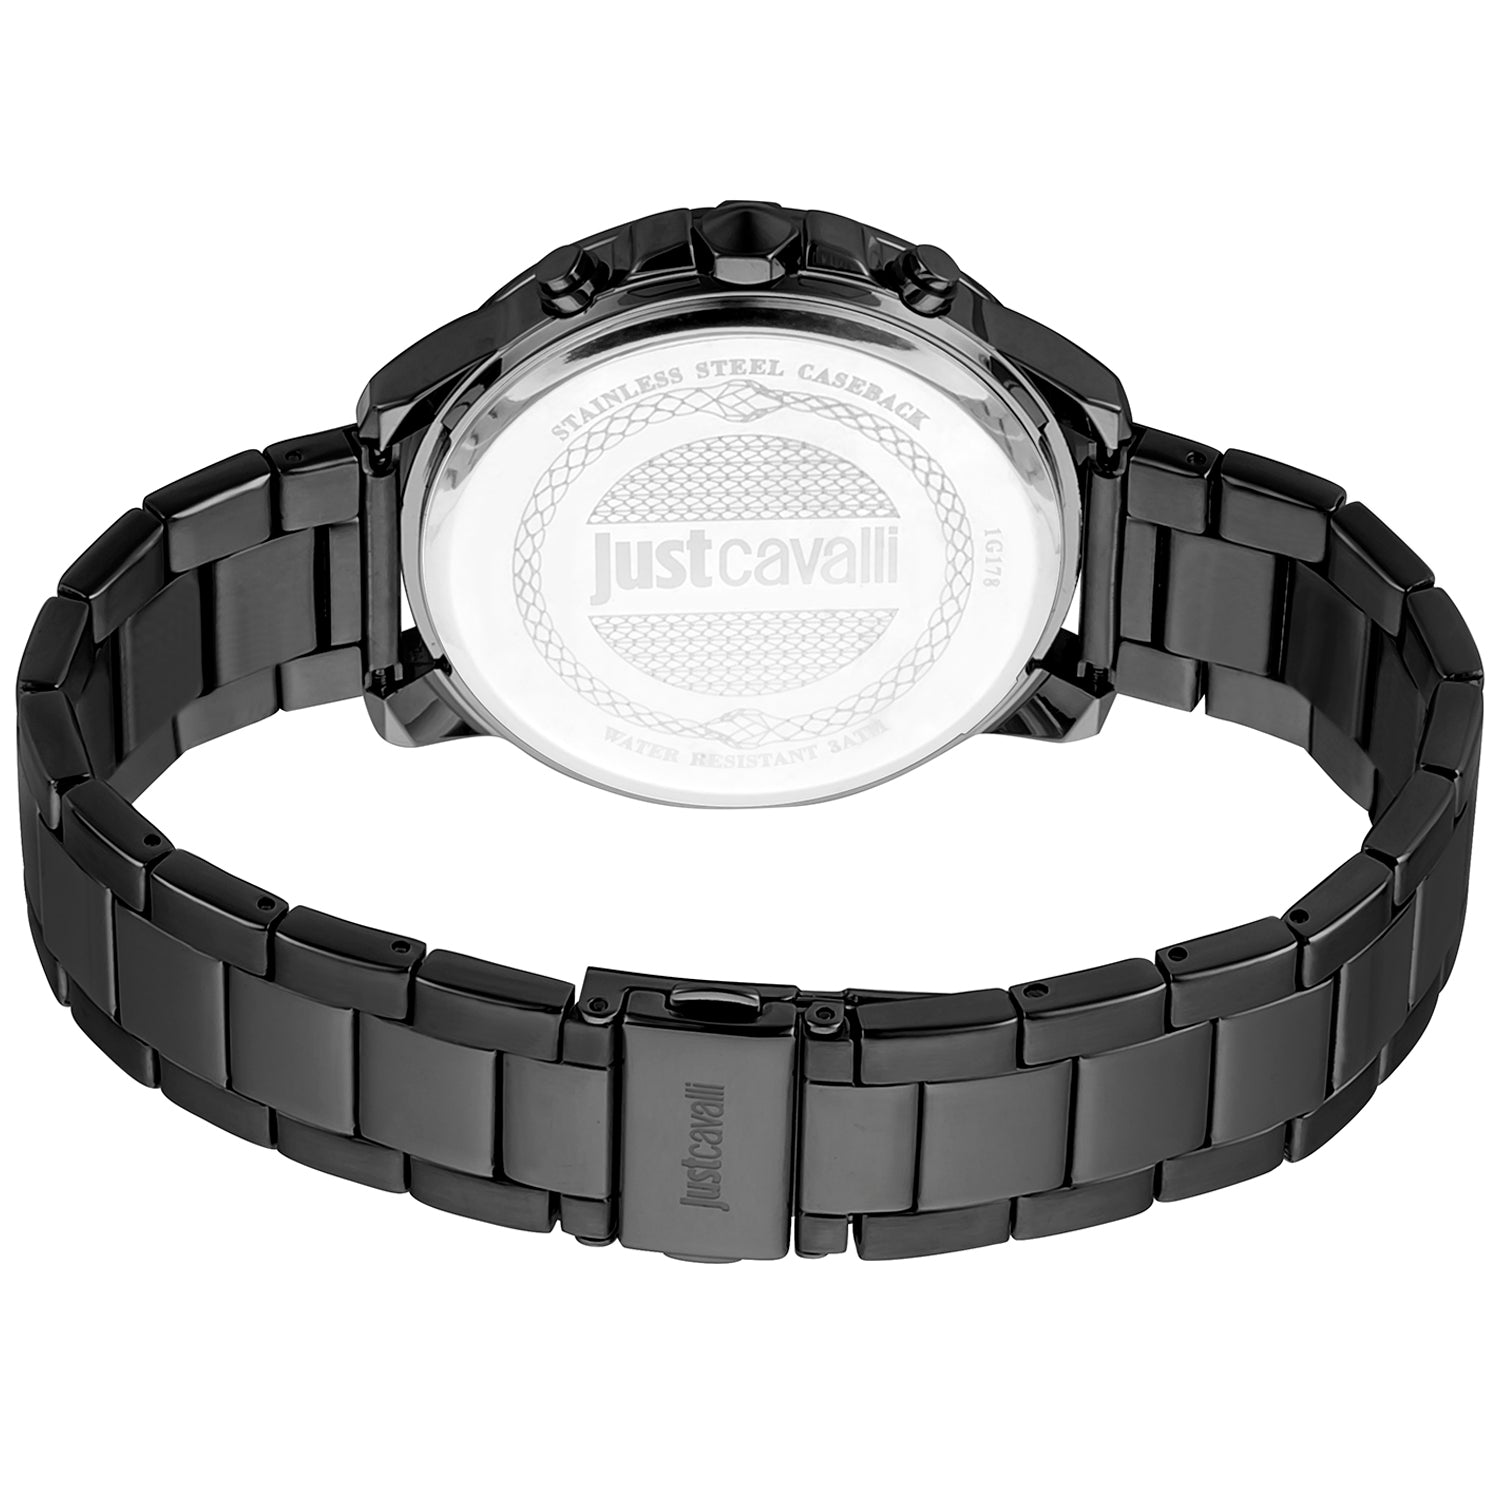 Just Cavalli Watches Just Cavalli Watch Men's Chronograph Black Stainless Steel Bracelet Quartz JC1G178M0075 Eyeglasses Eyewear UK USA Australia 